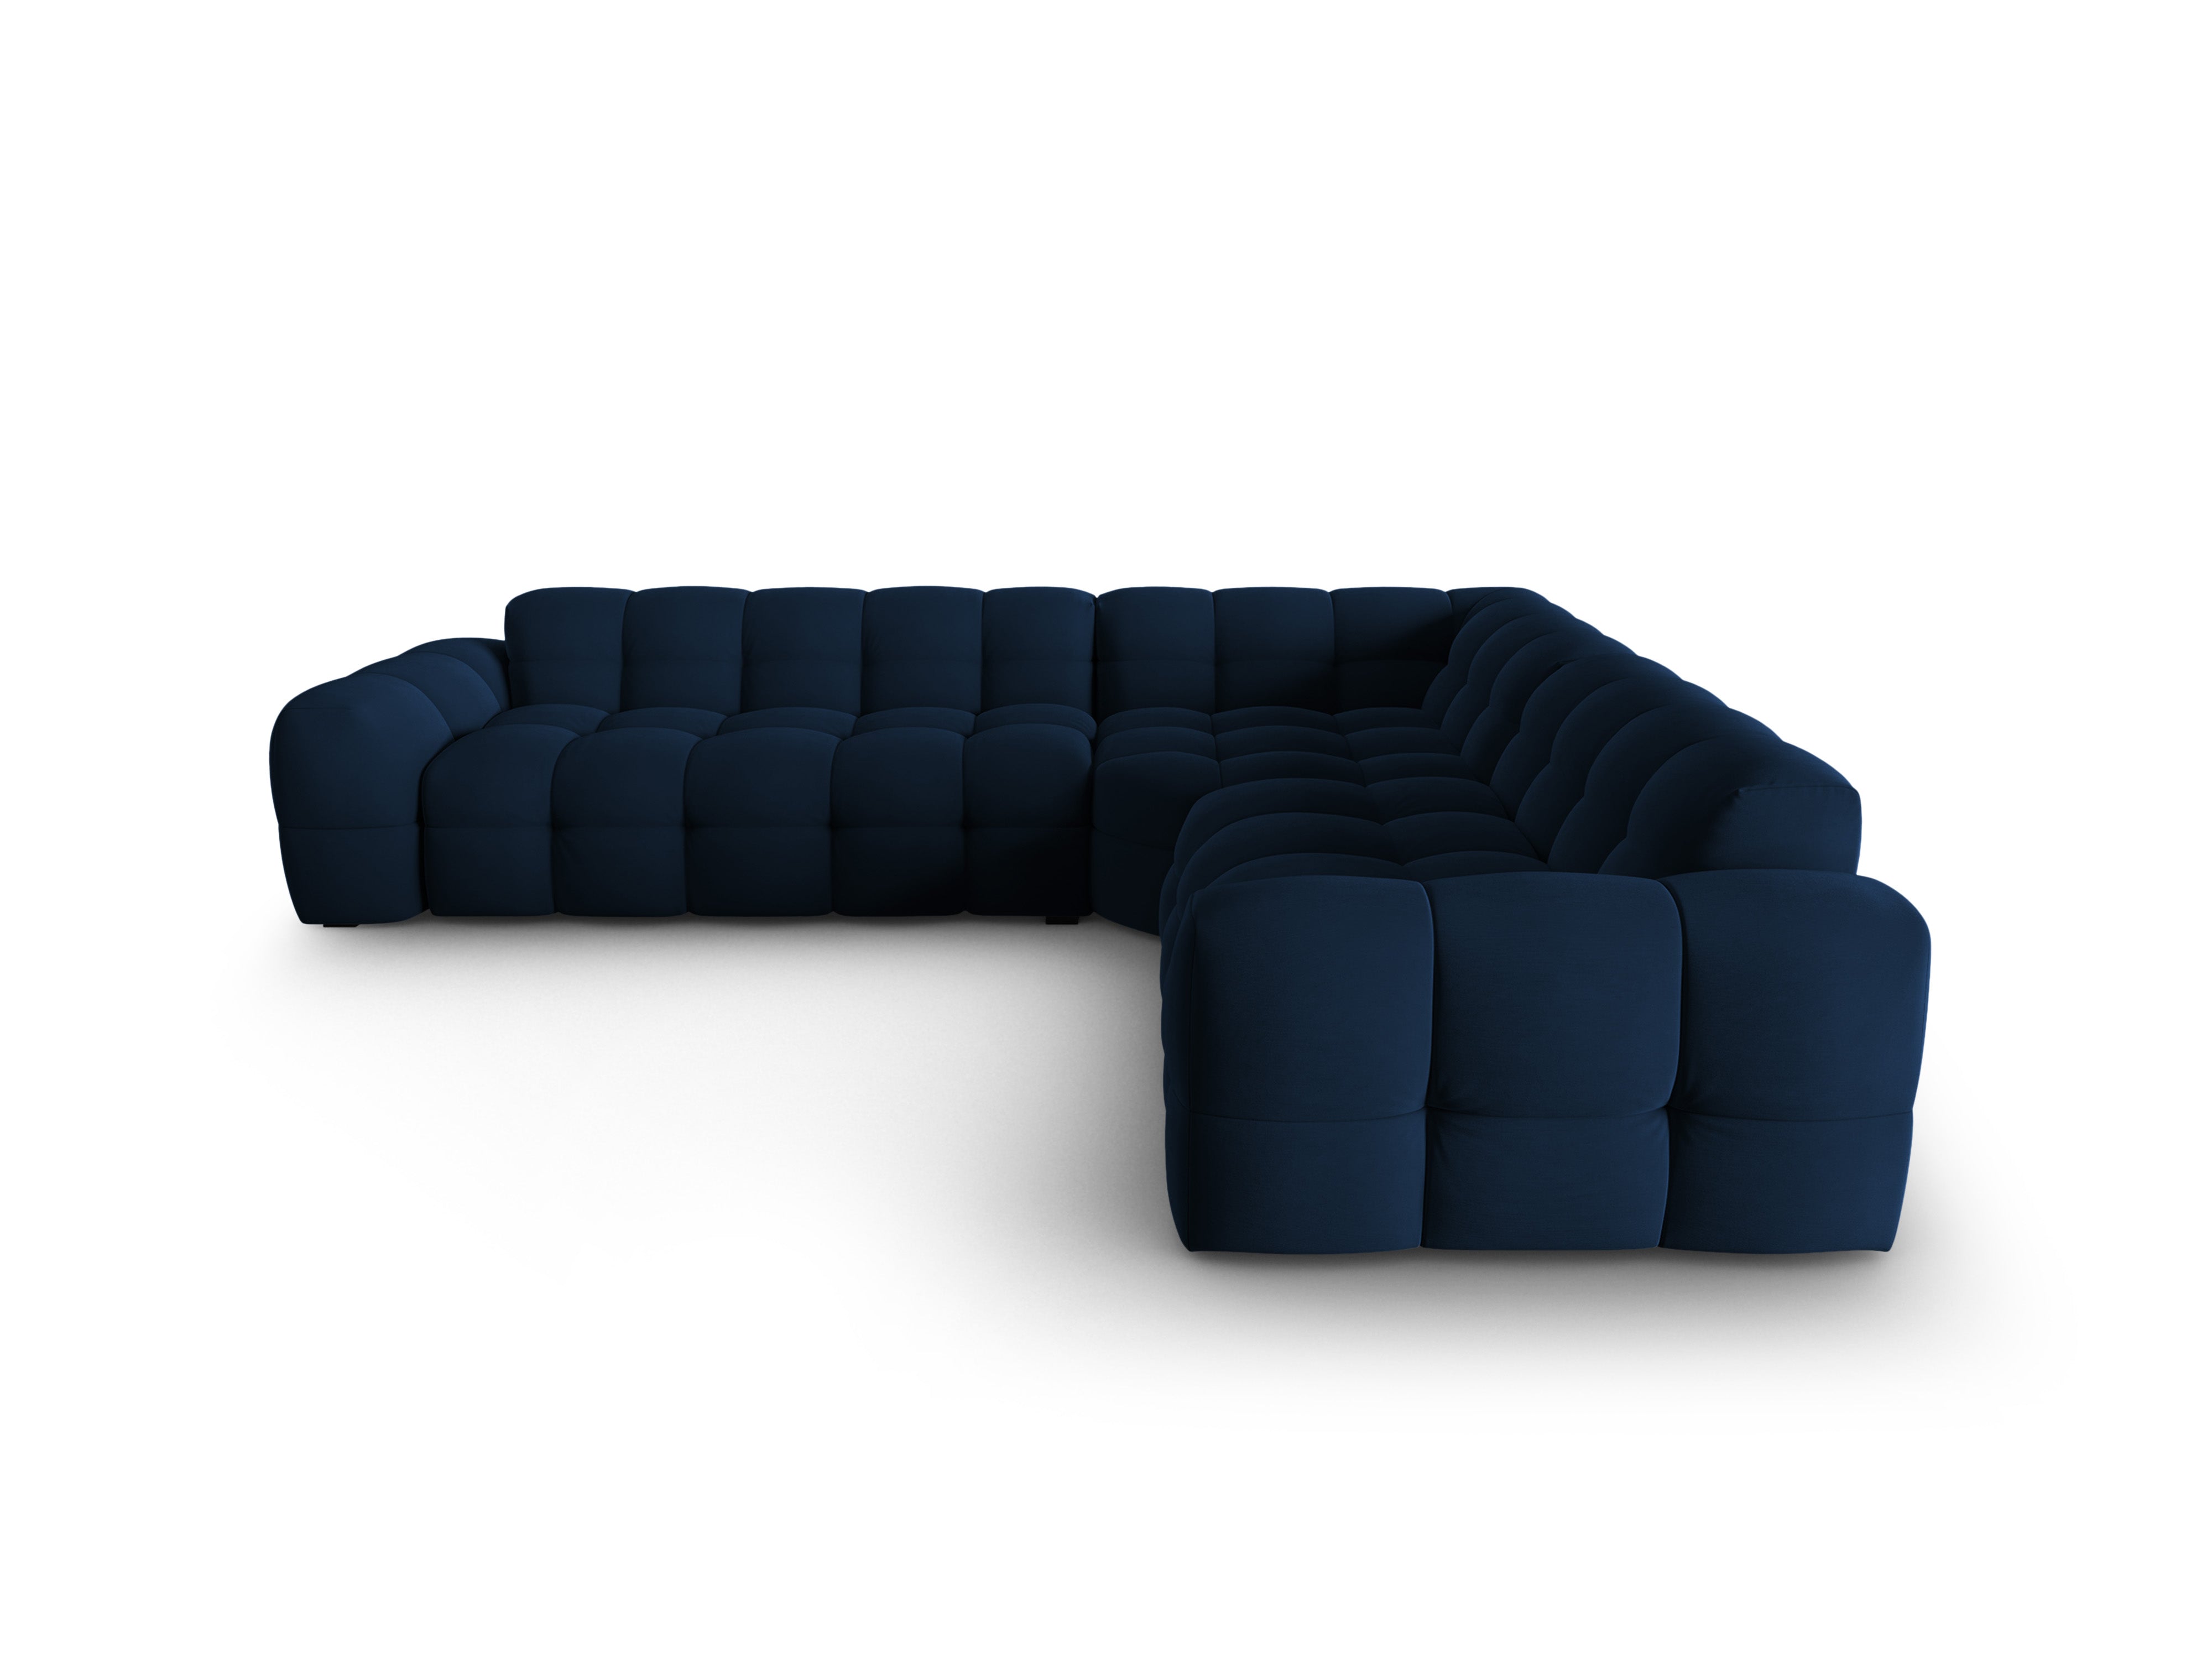 Velvet Symmetrical Corner Sofa, "Nino", 5 Seats, 294x294x68
Made in Europe, Maison Heritage, Eye on Design